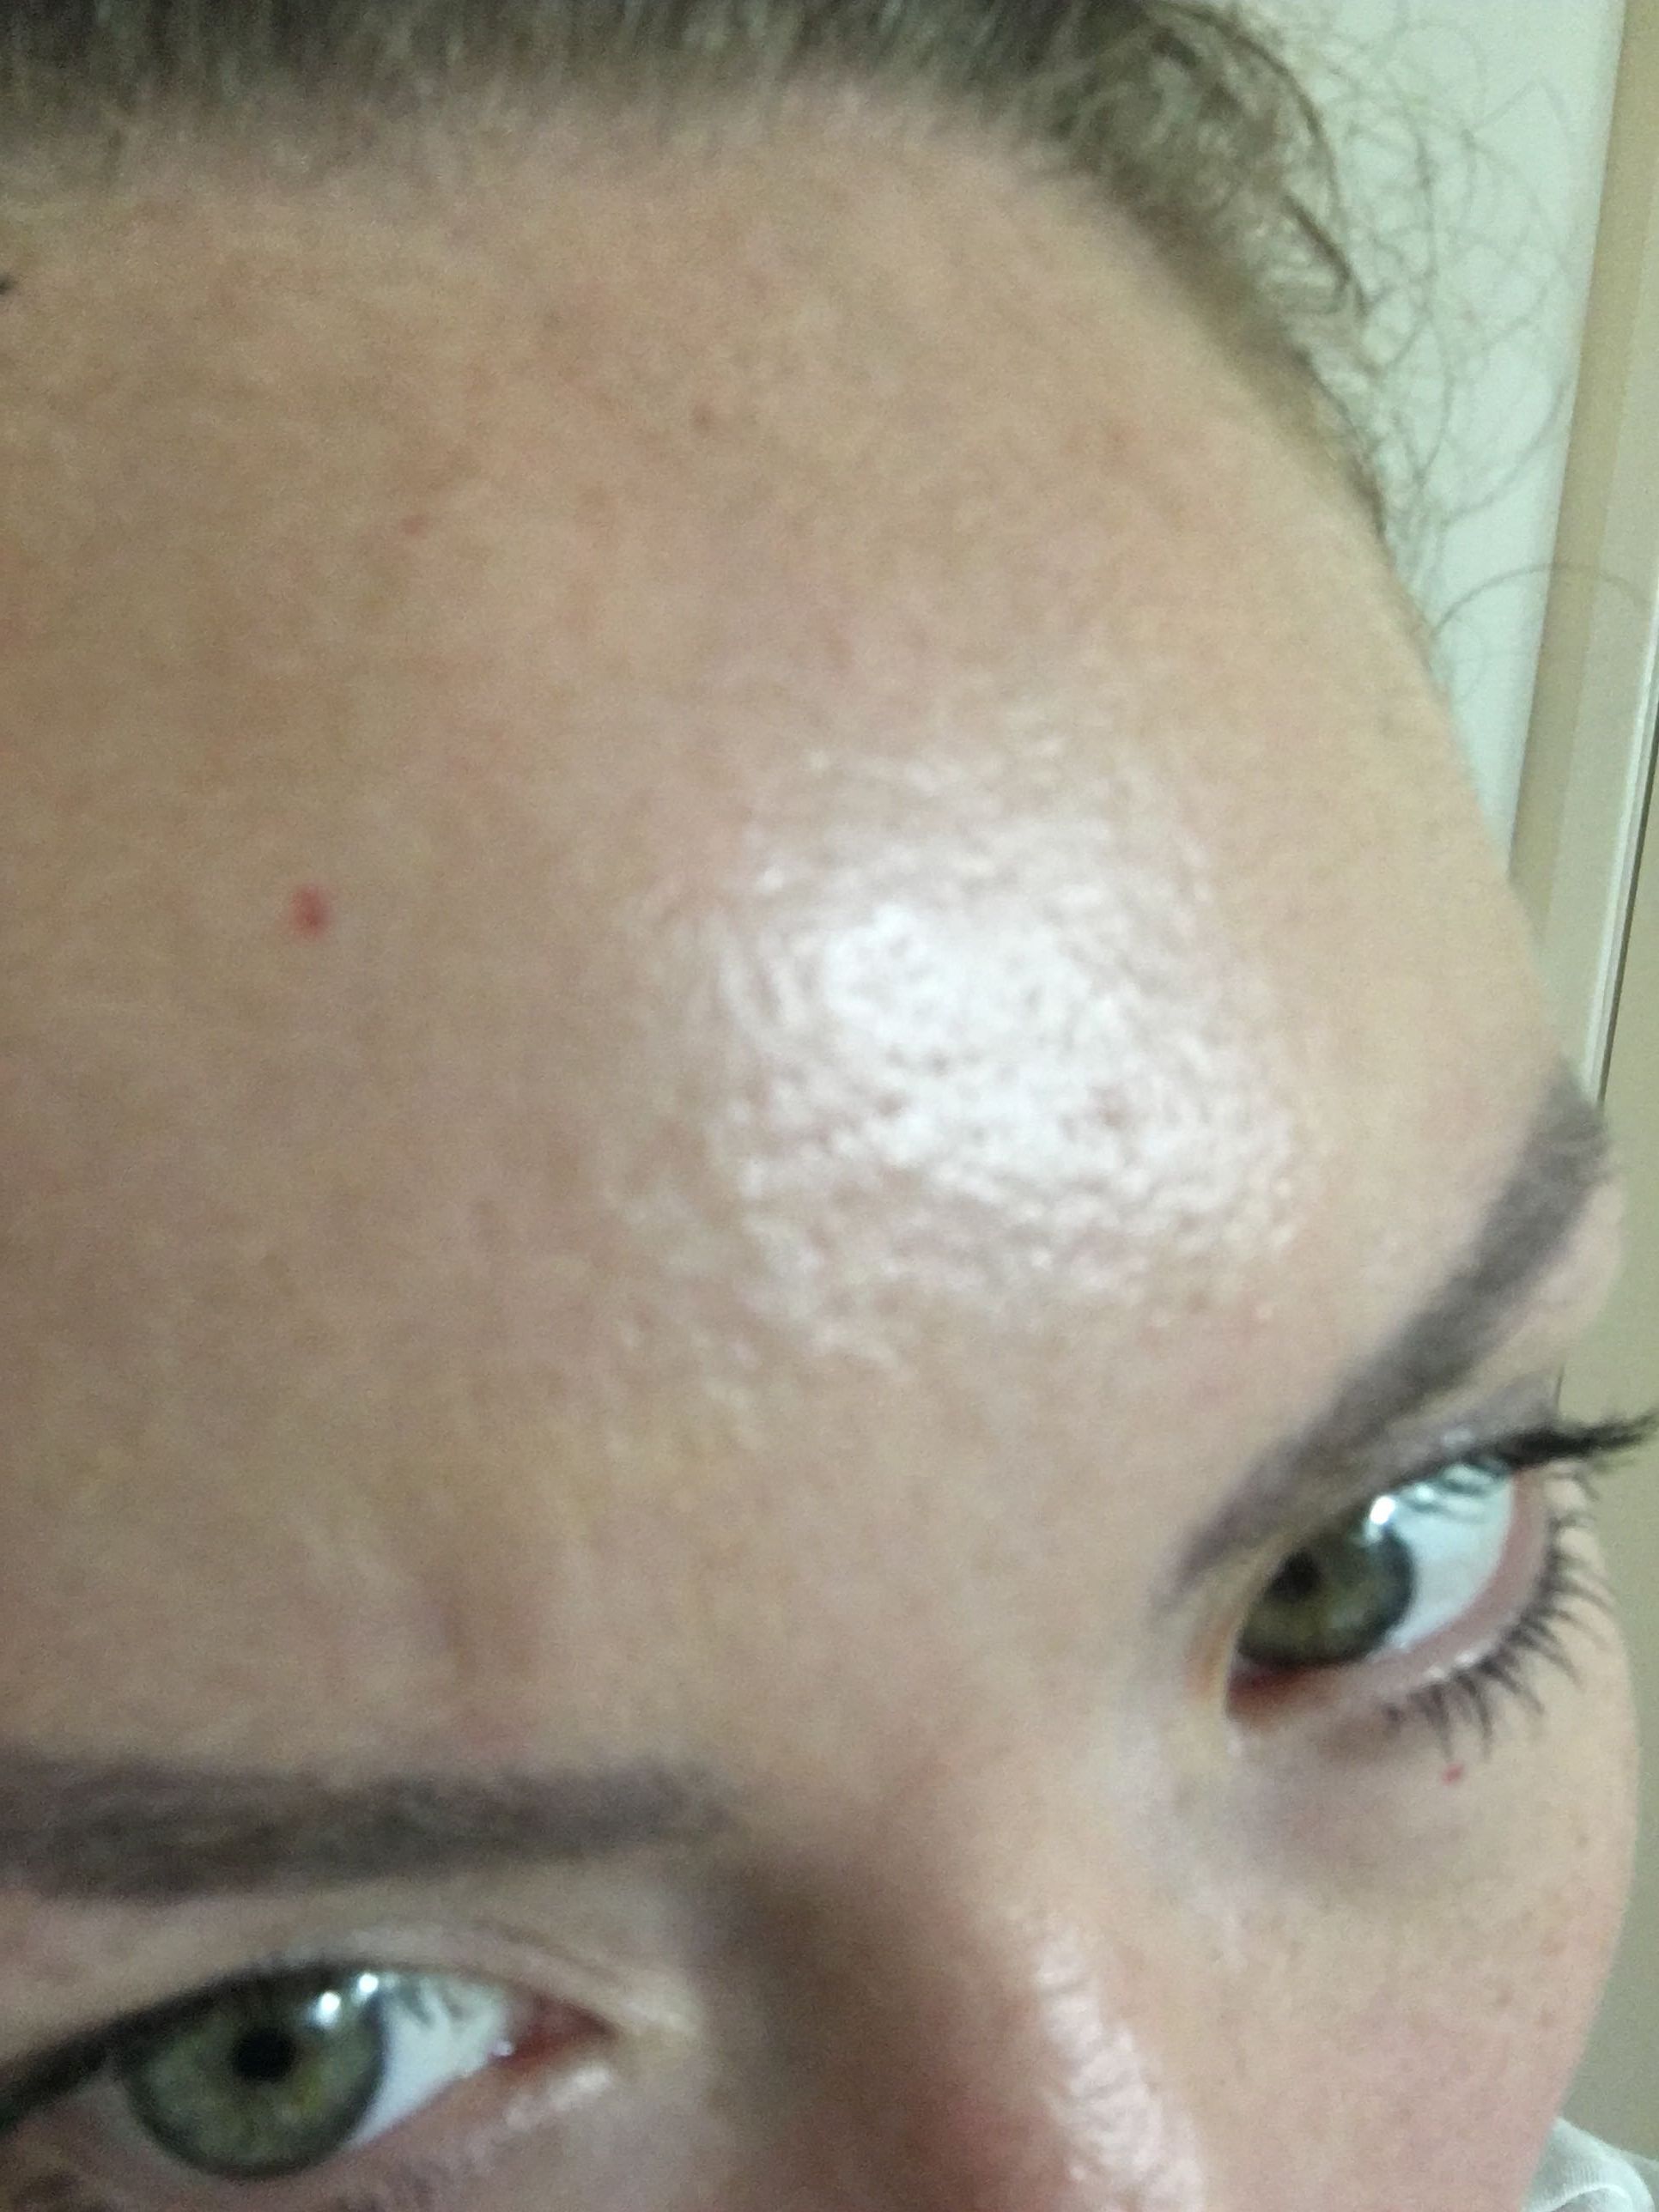 Small holes on my face! - Beauty Insider Community